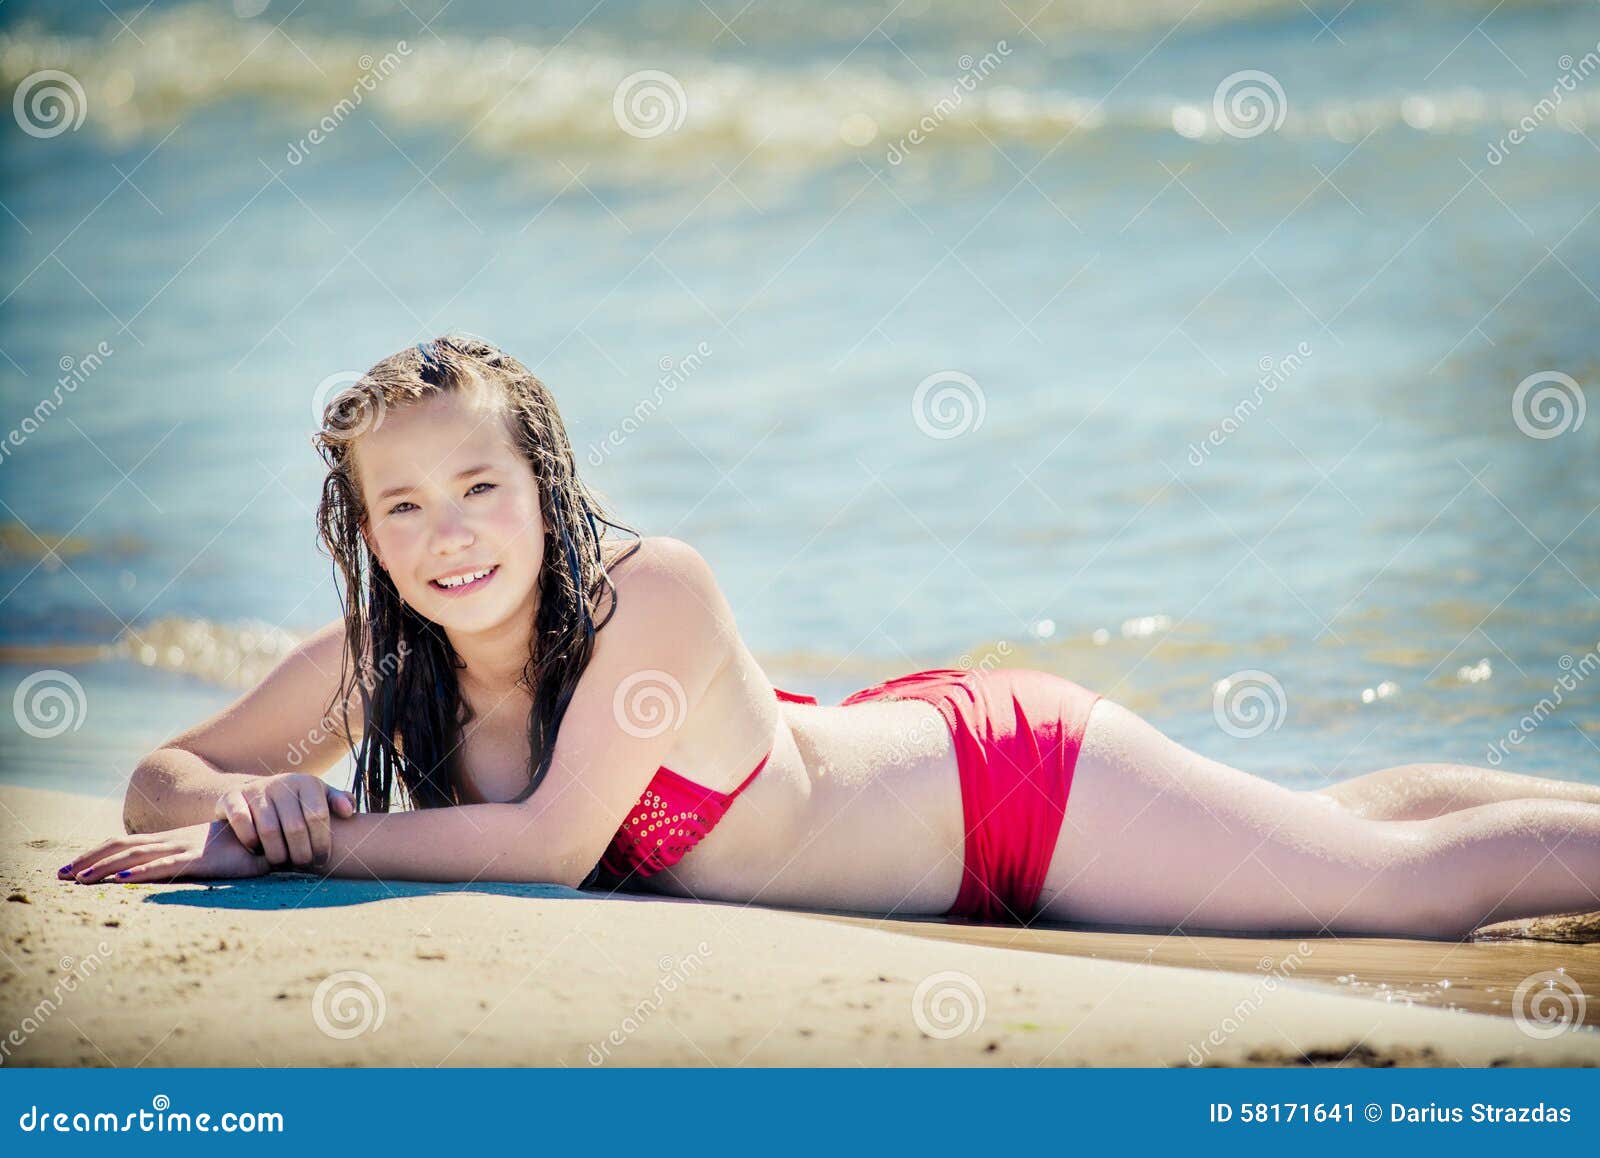 Young Teens In Bikinis At Beach